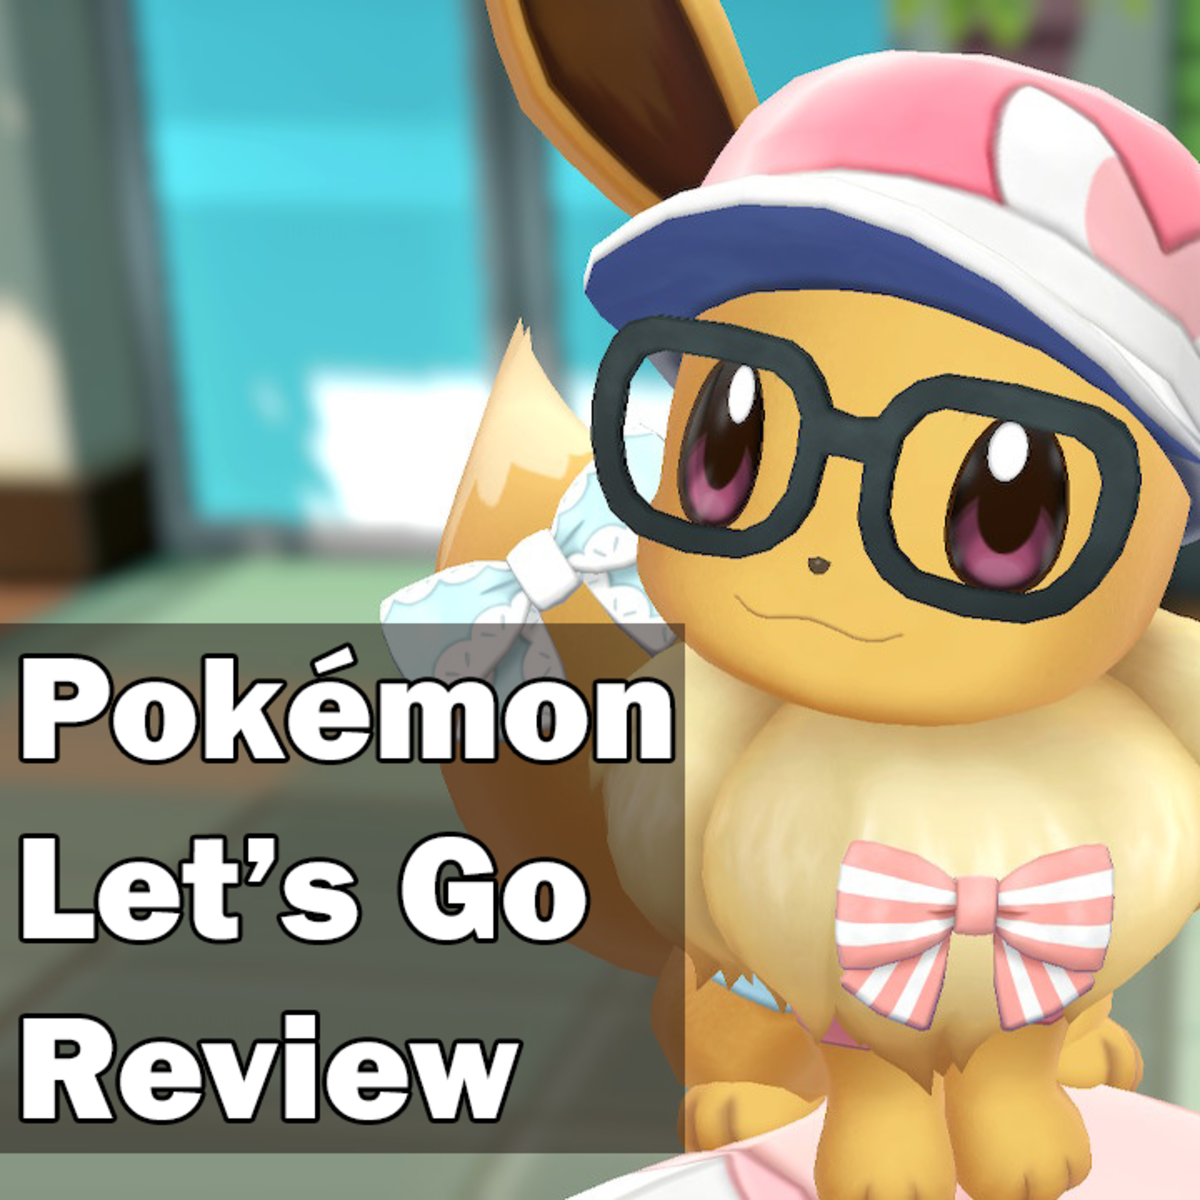 Pokémon: Let's Go, Pikachu! and Pokémon: Let's Go, Eevee!